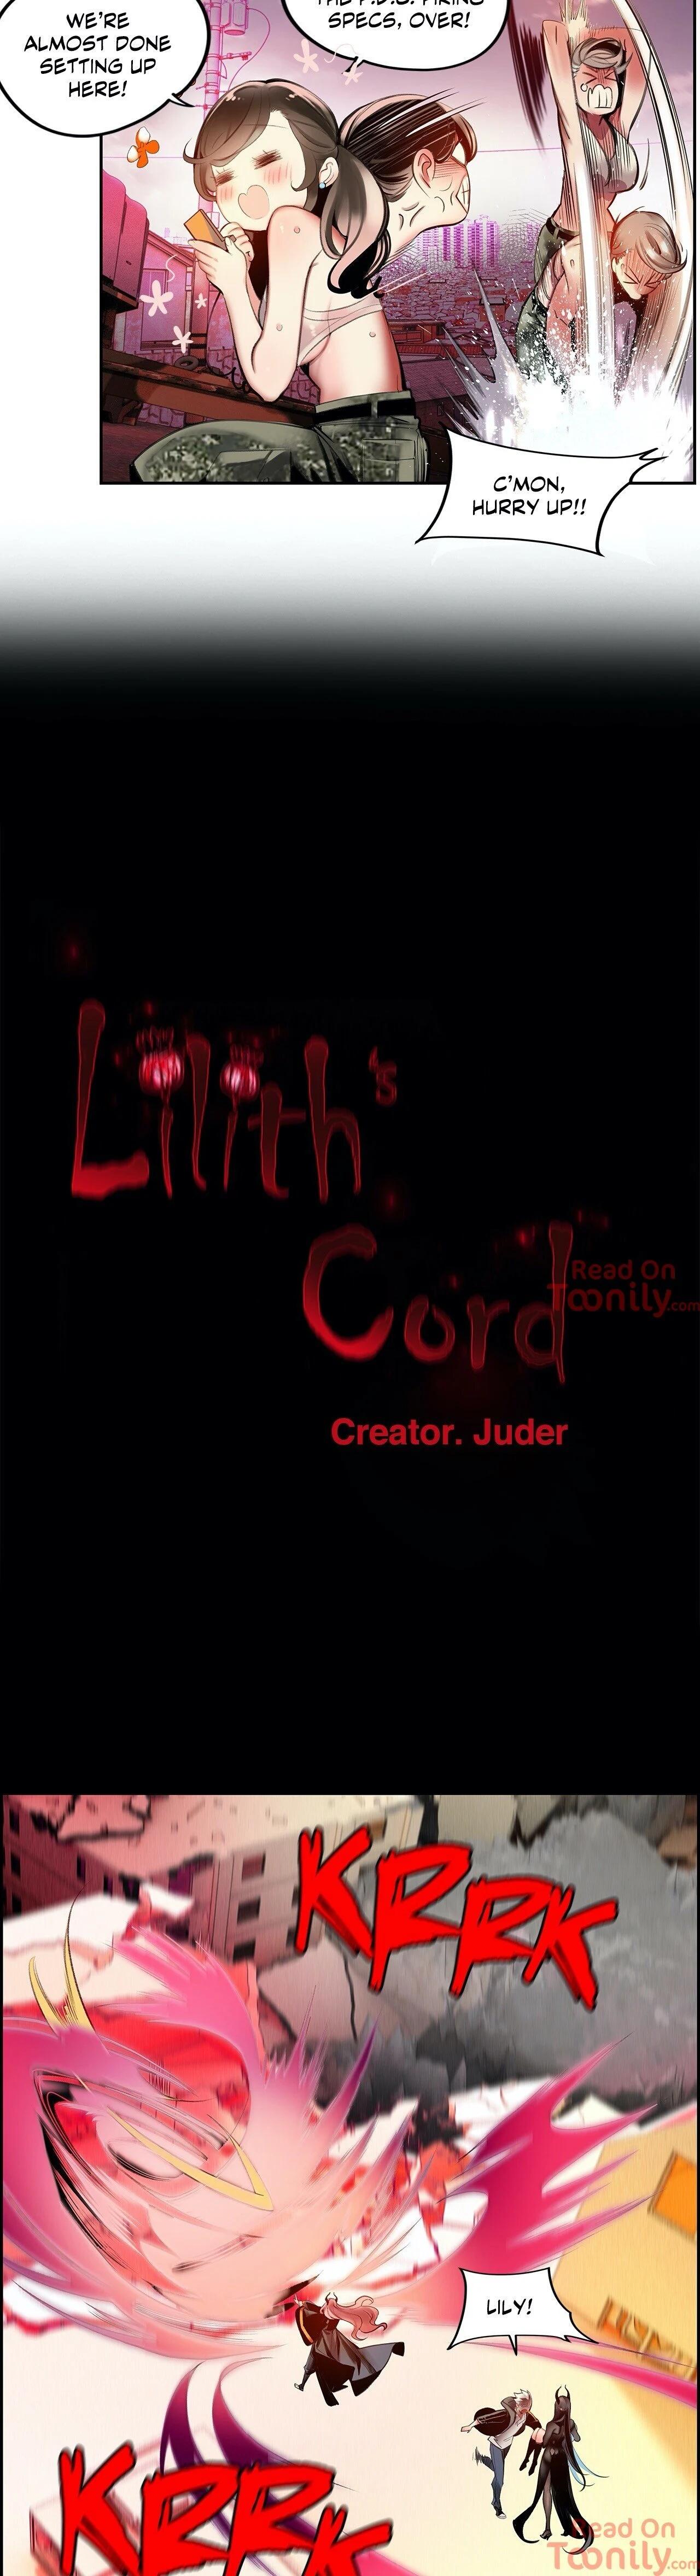 Lilith`s Cord [Juder, Deo Mi Mandu] Ch. 069-092.5 - Part 2- english 613